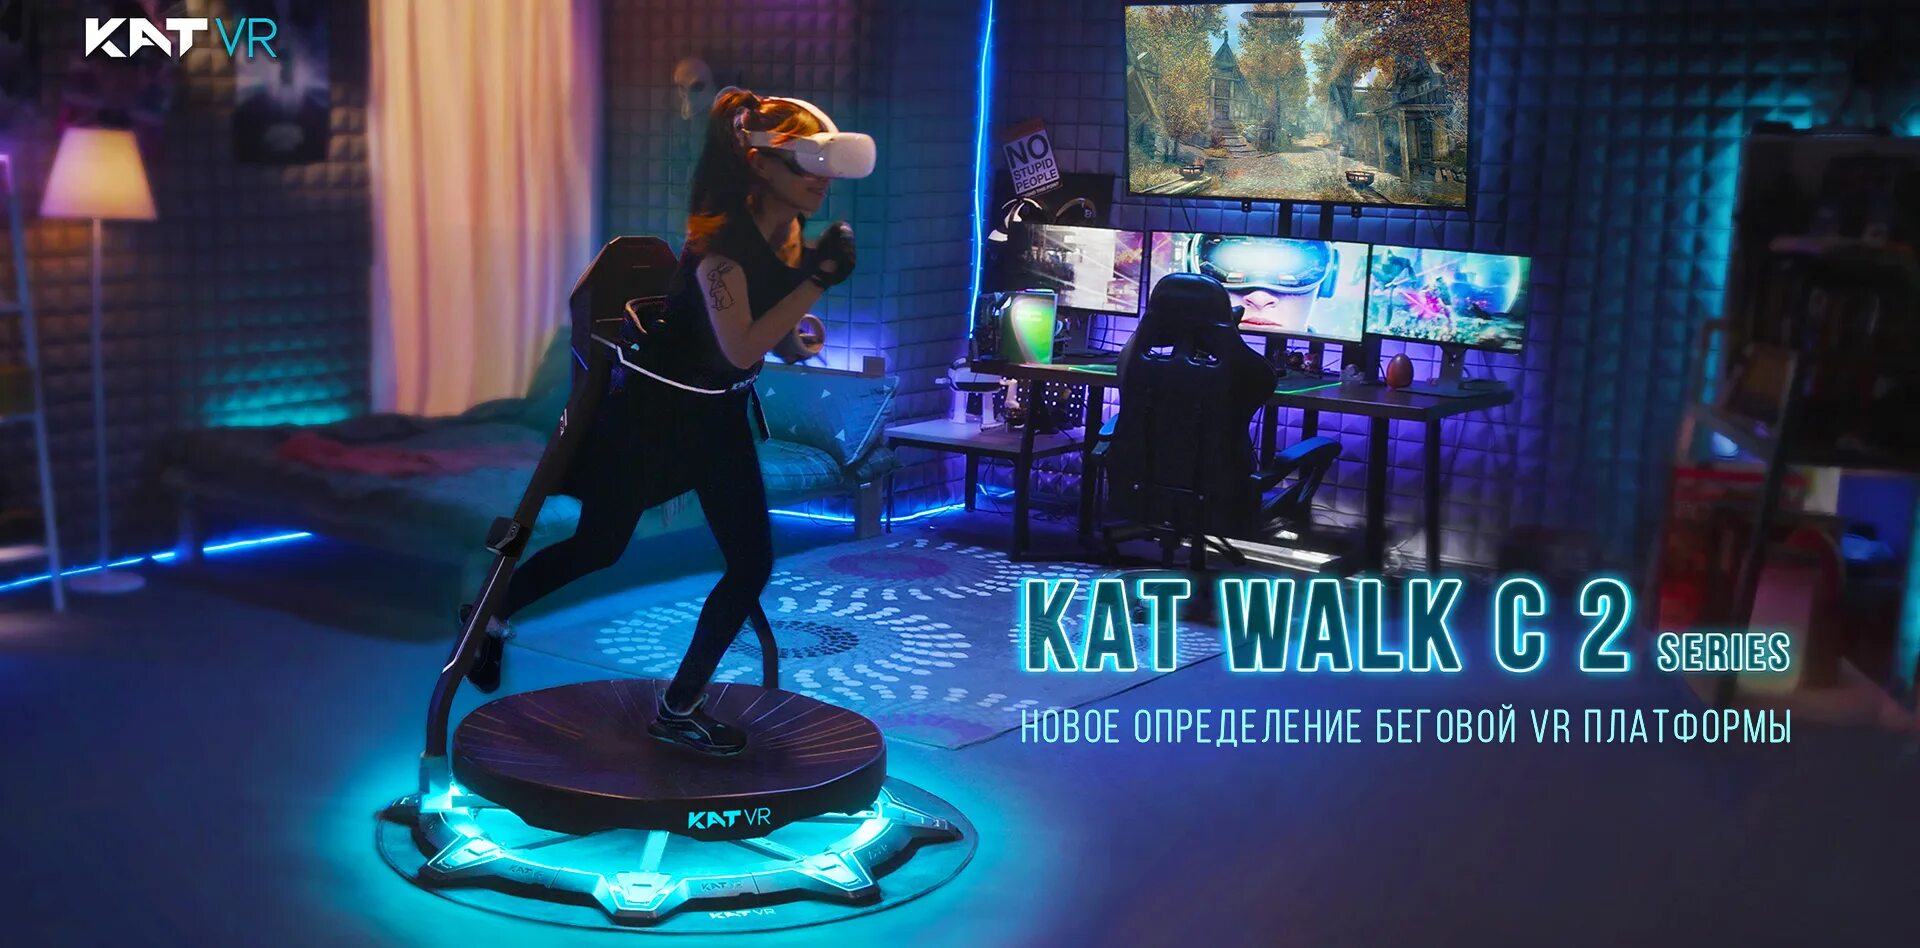 VR Беговая платформа. Kat walk c VR Treadmill. Kat walk c2+. Дорожка для виртуальной реальности.